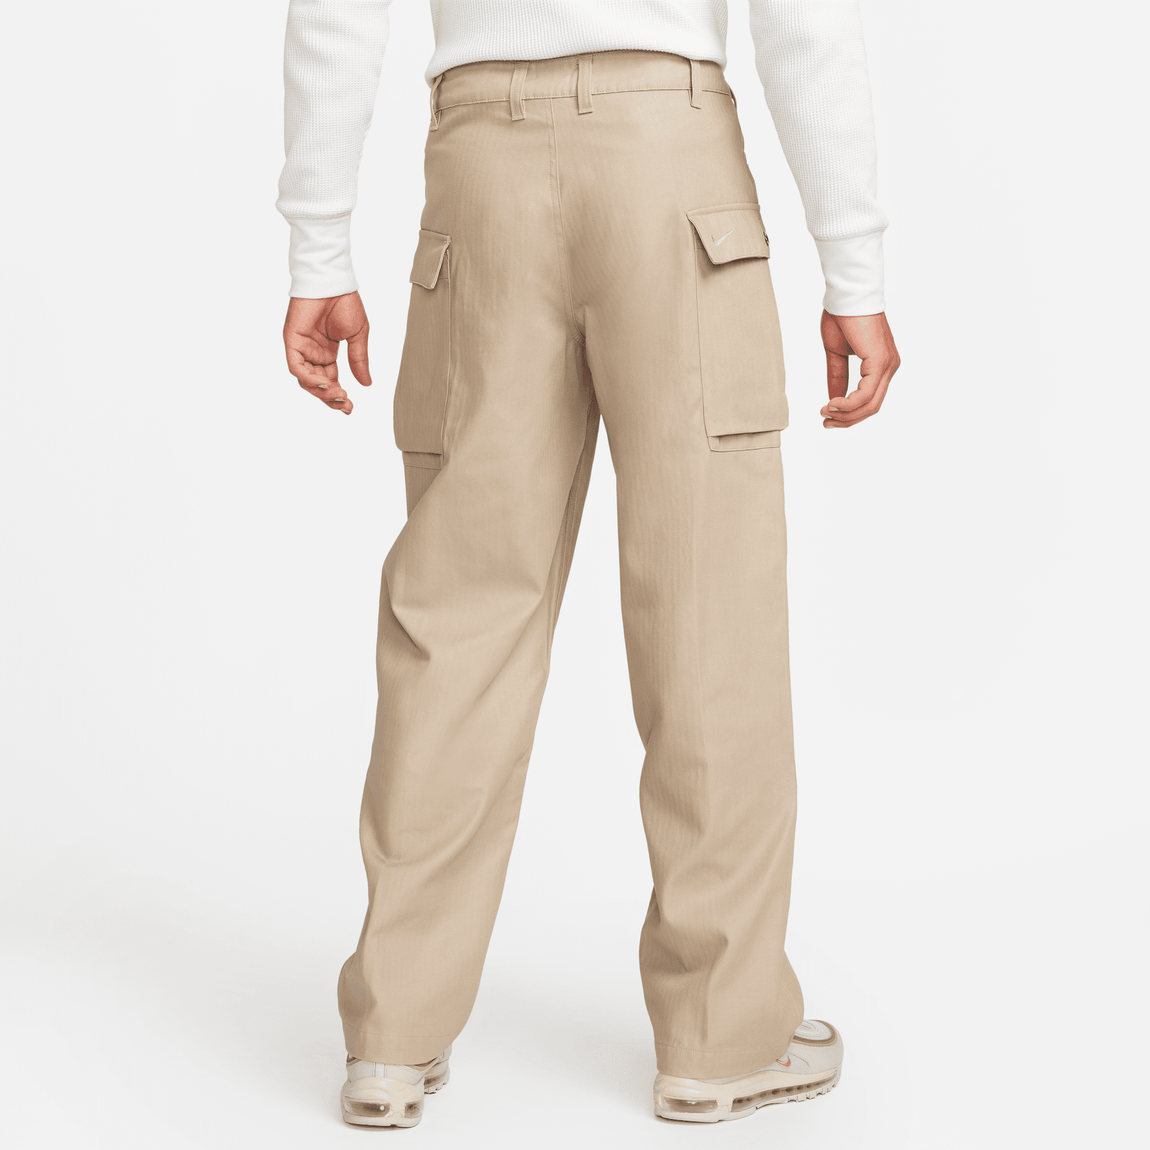 Nike Life Cargo Pants ( Khaki ) - Nike Life Cargo Pants ( Khaki ) - 